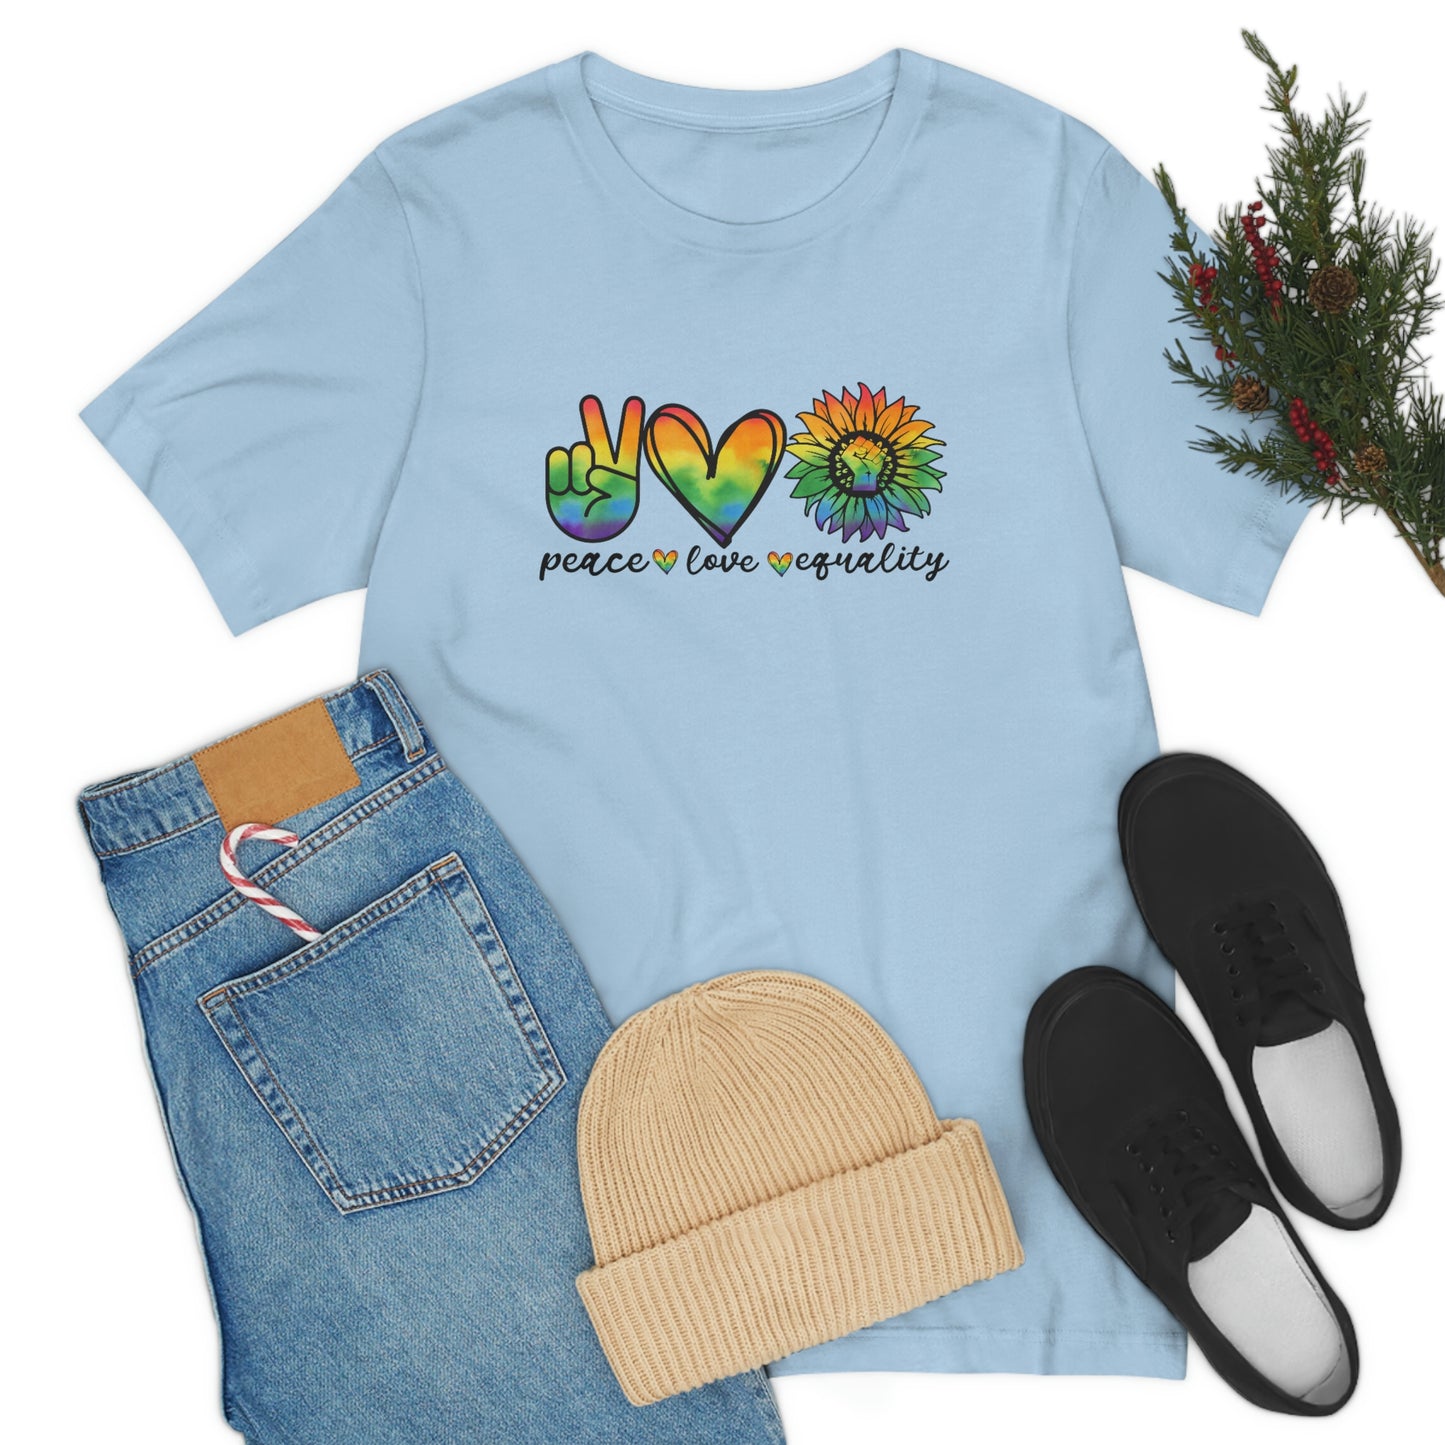 Peace Love Equality LGBTQIA Print Unisex Jersey Short Sleeve Tee